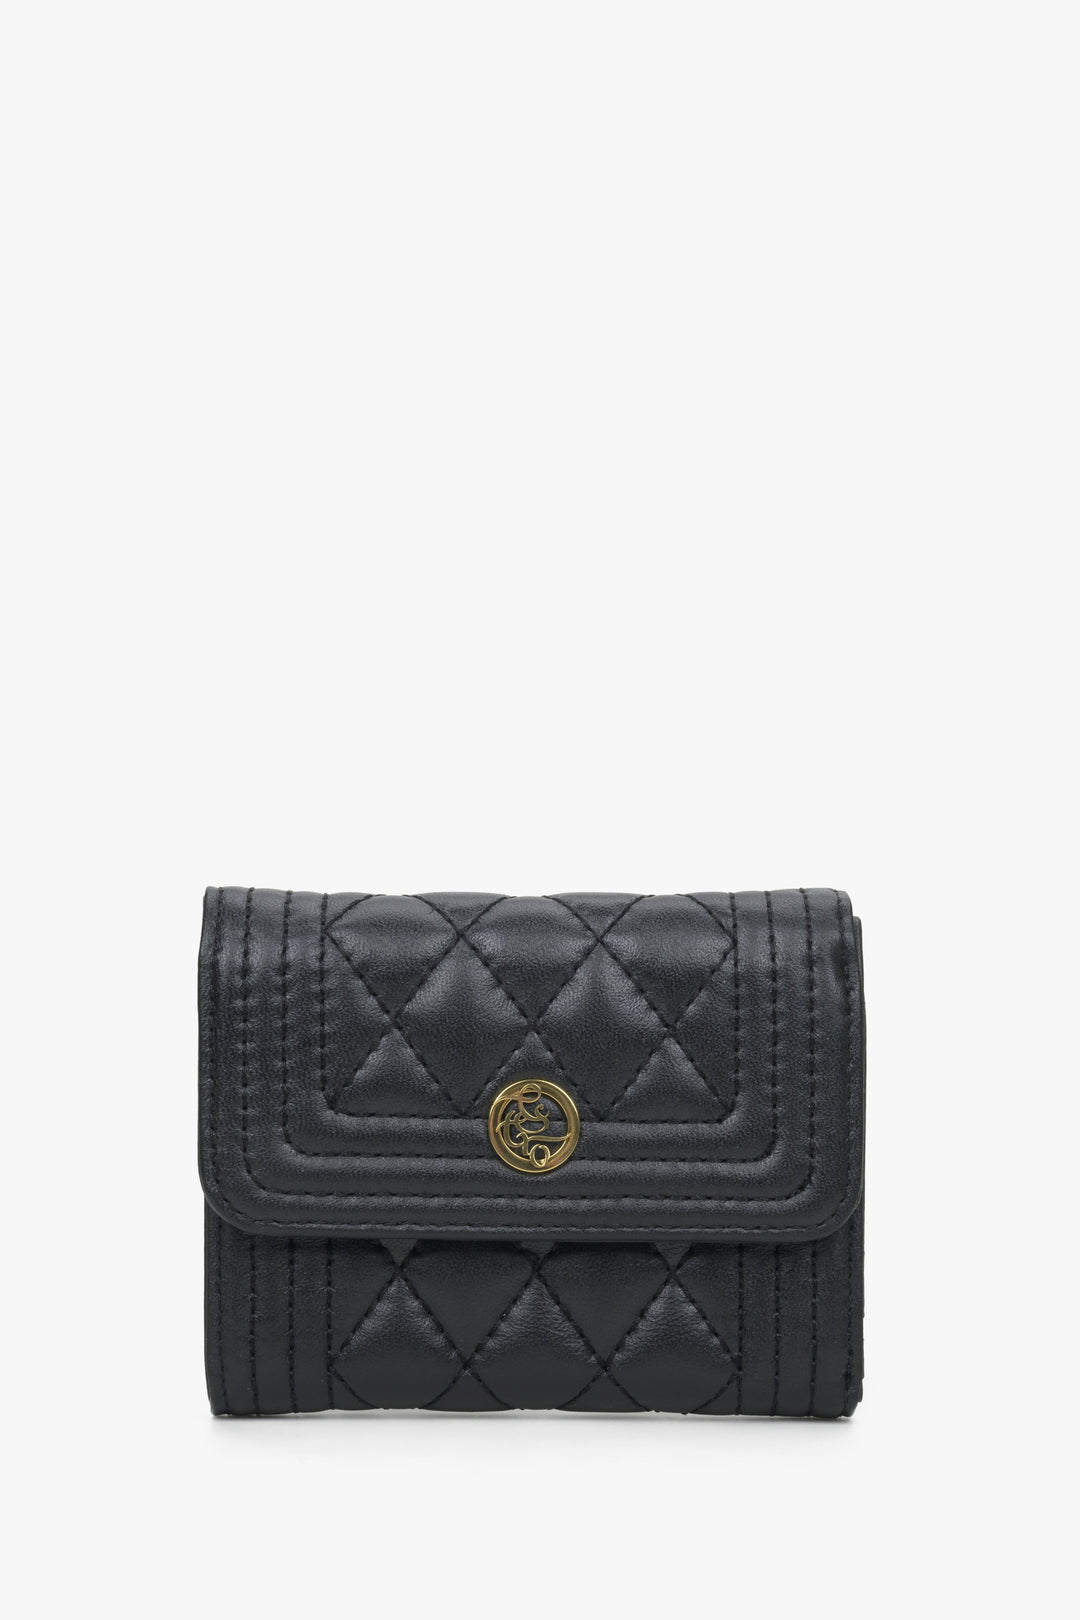 Women's Tri-Fold Black Wallet with Golden Accents Estro ER00114479.